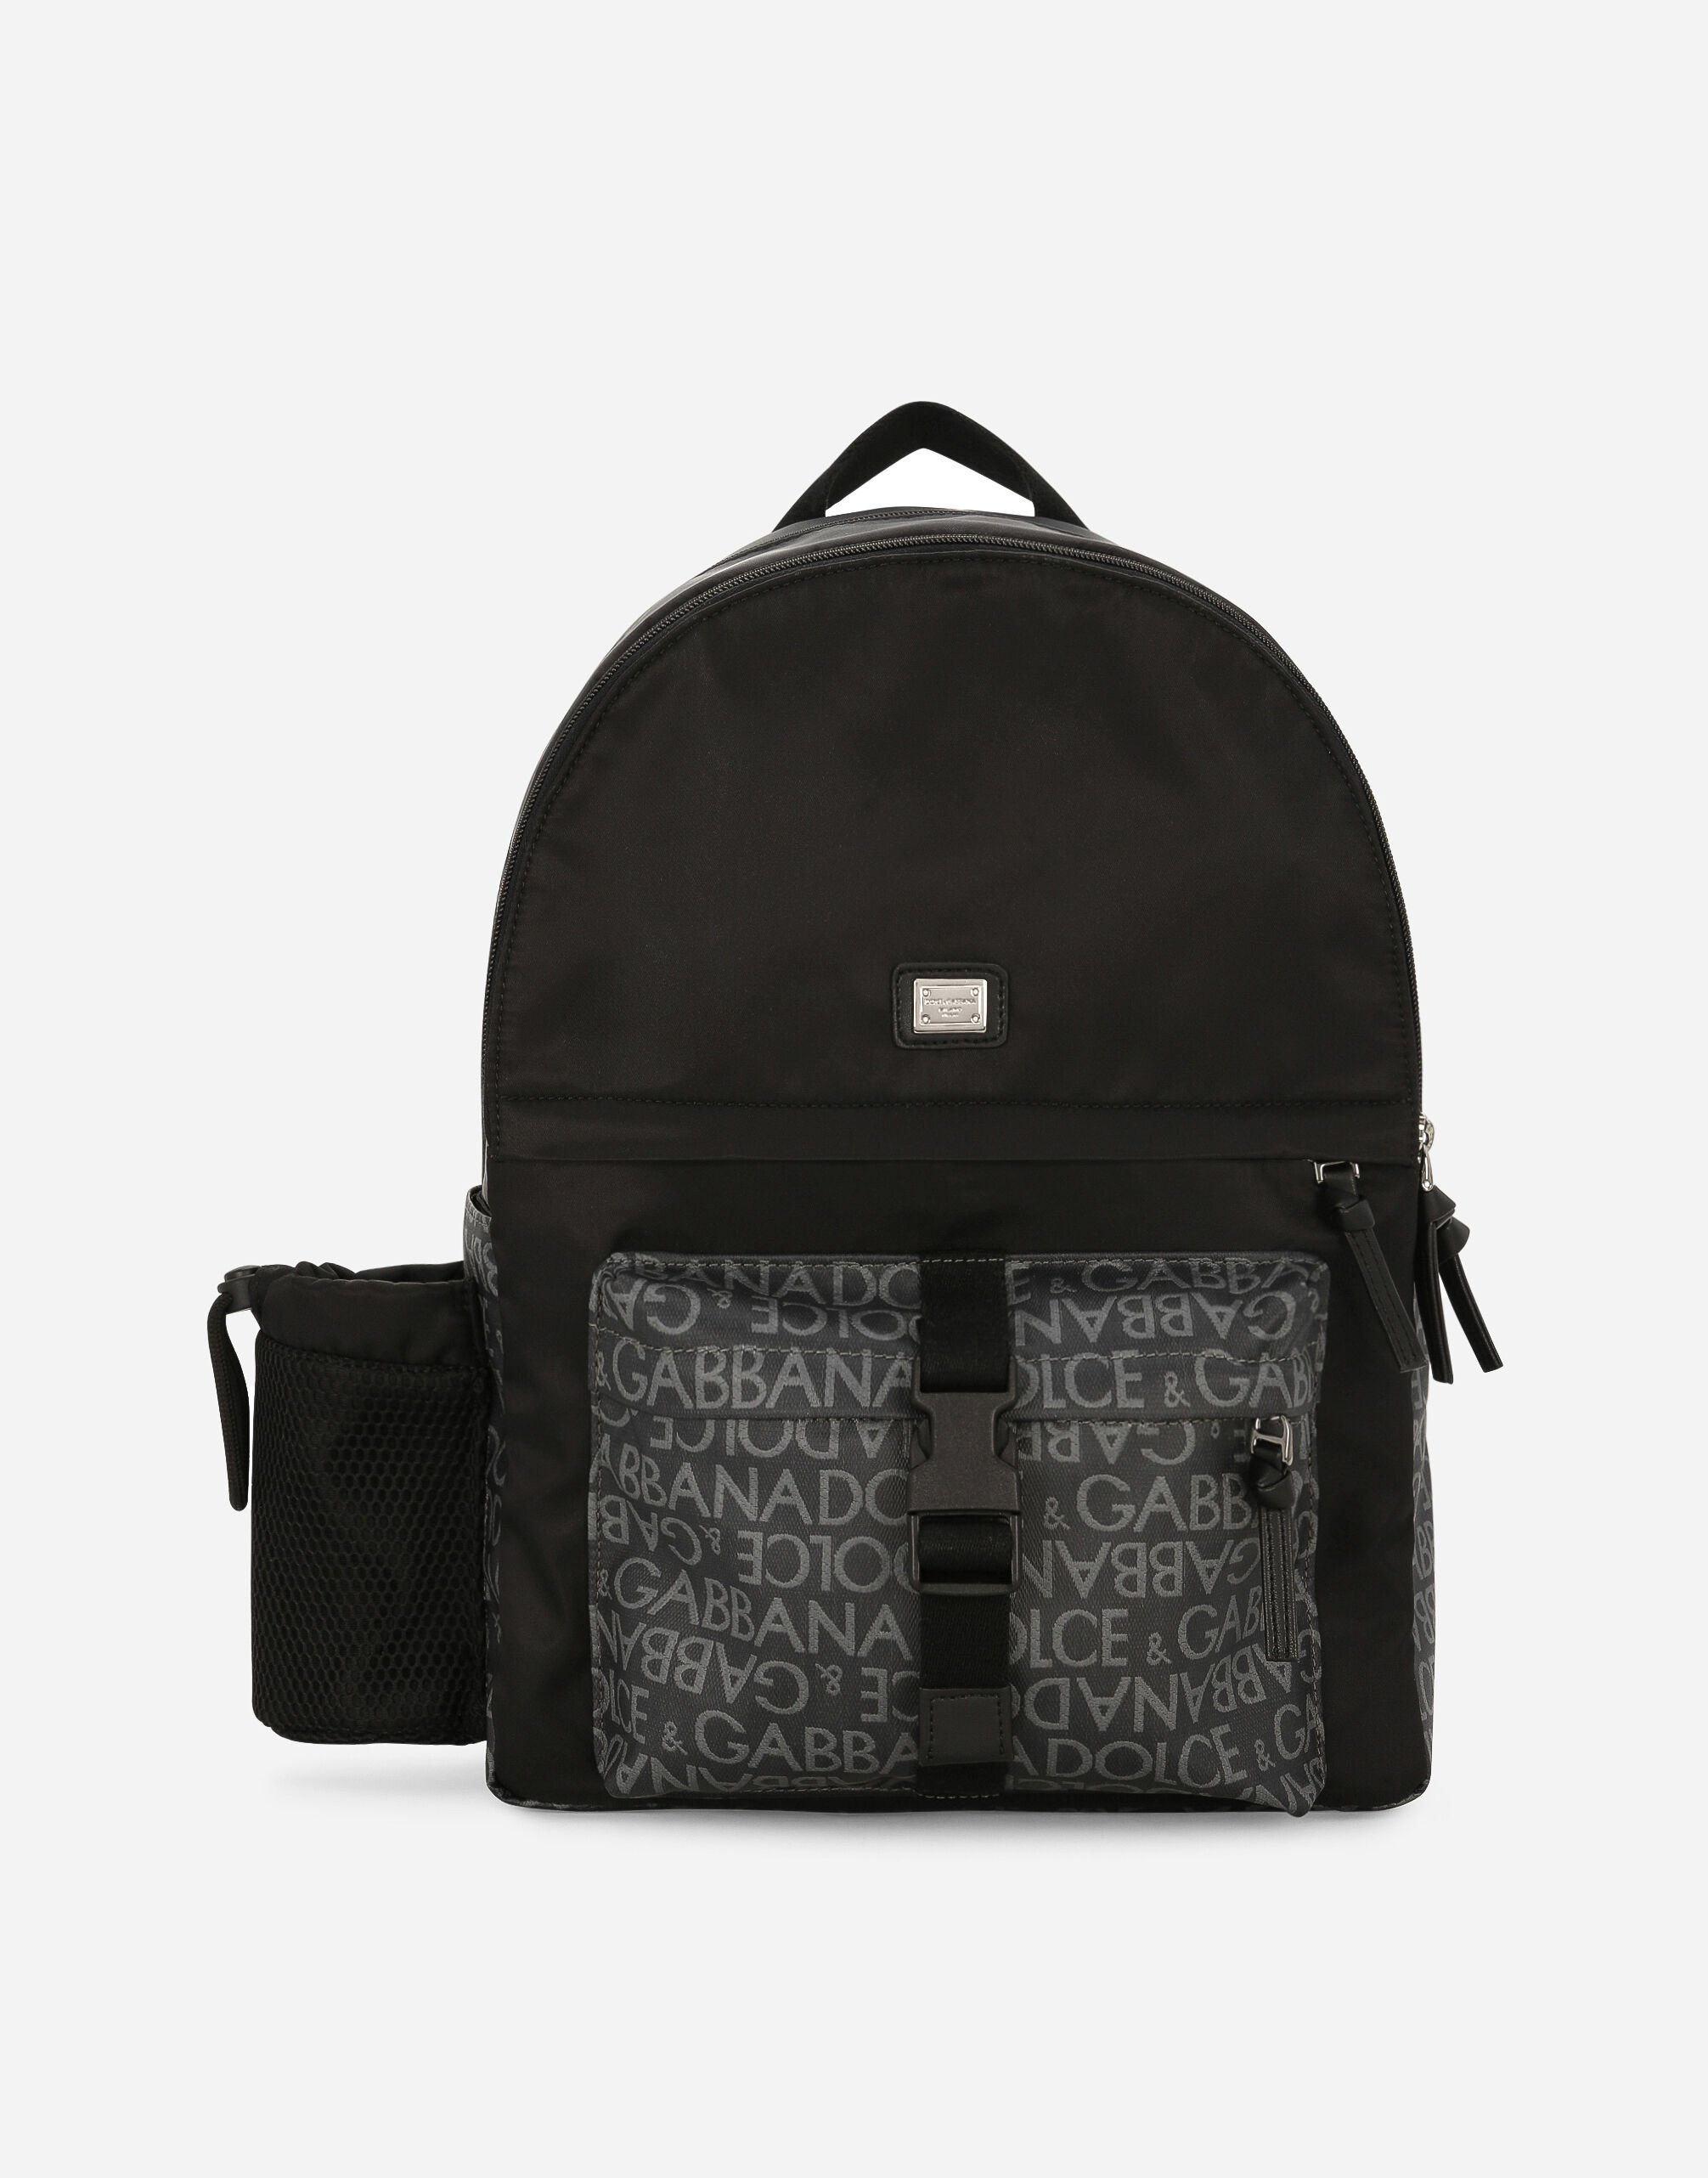 DolceGabbanaSpa Nylon backpack with jacquard logo details Green L41J68FU1L6